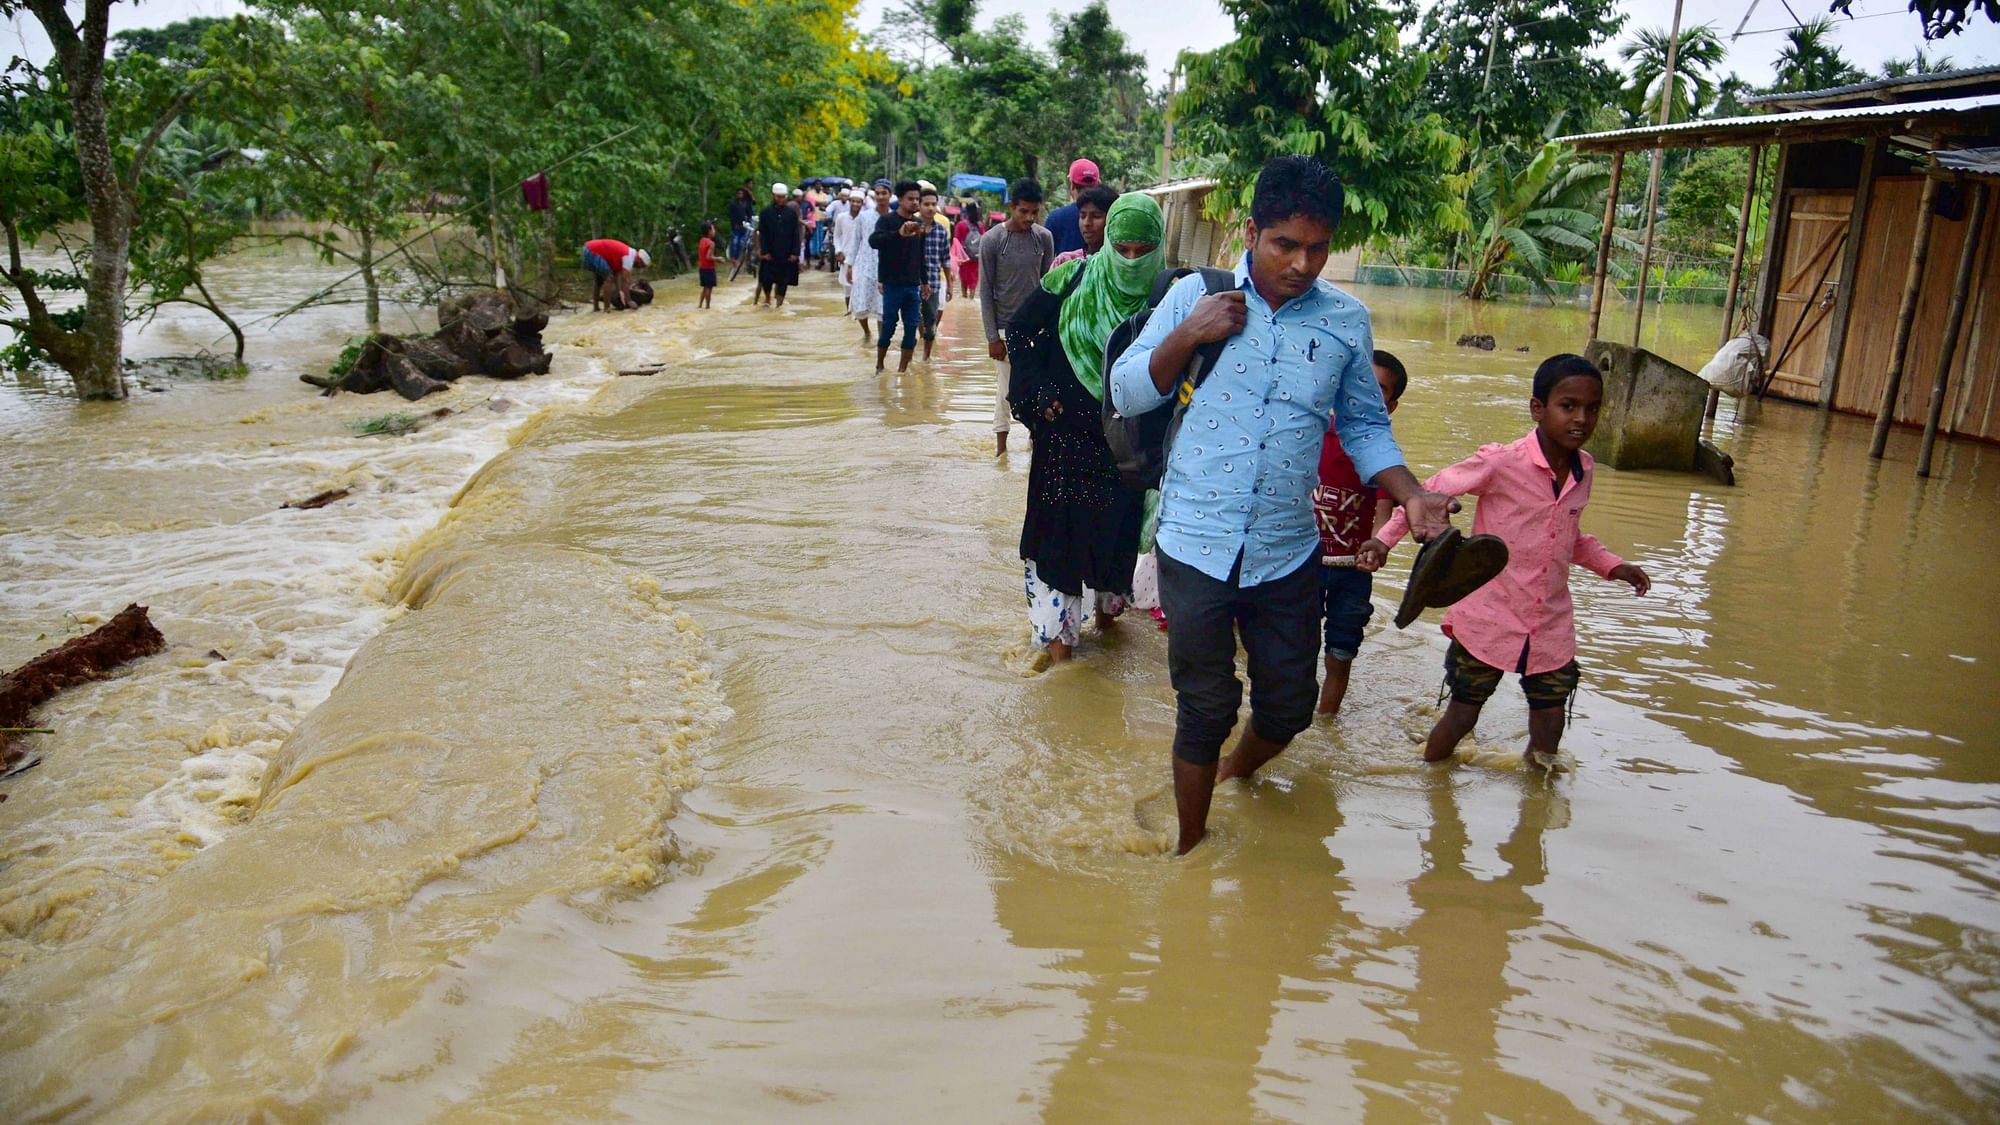 <div class="paragraphs"><p>Villagers wade through a flood-affected area.</p></div>